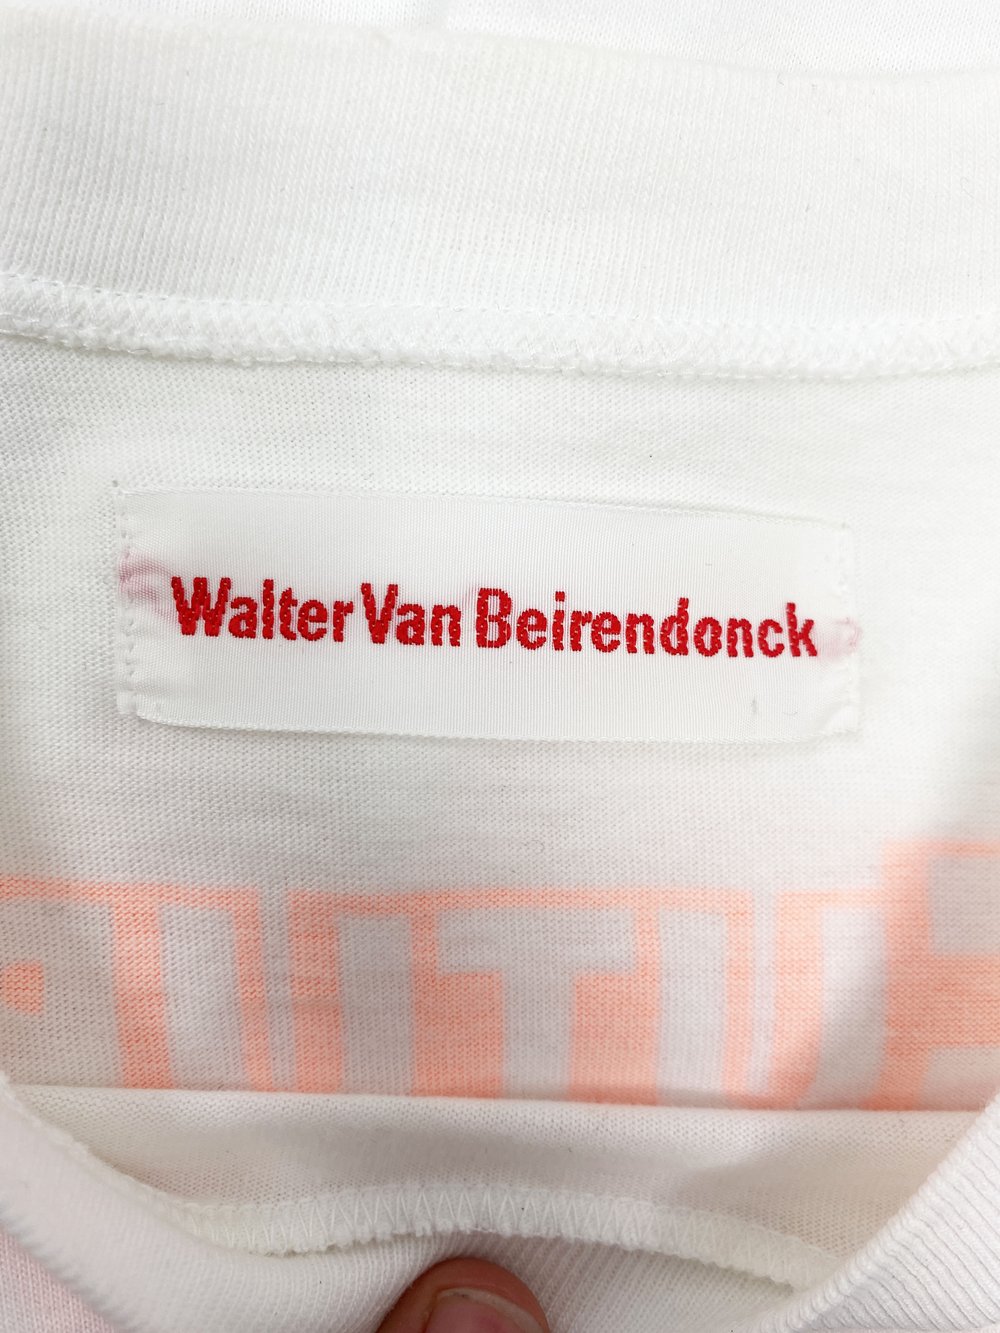 Walter Van Beirendonck W & LT T-shirt Transfer print bear Size M/